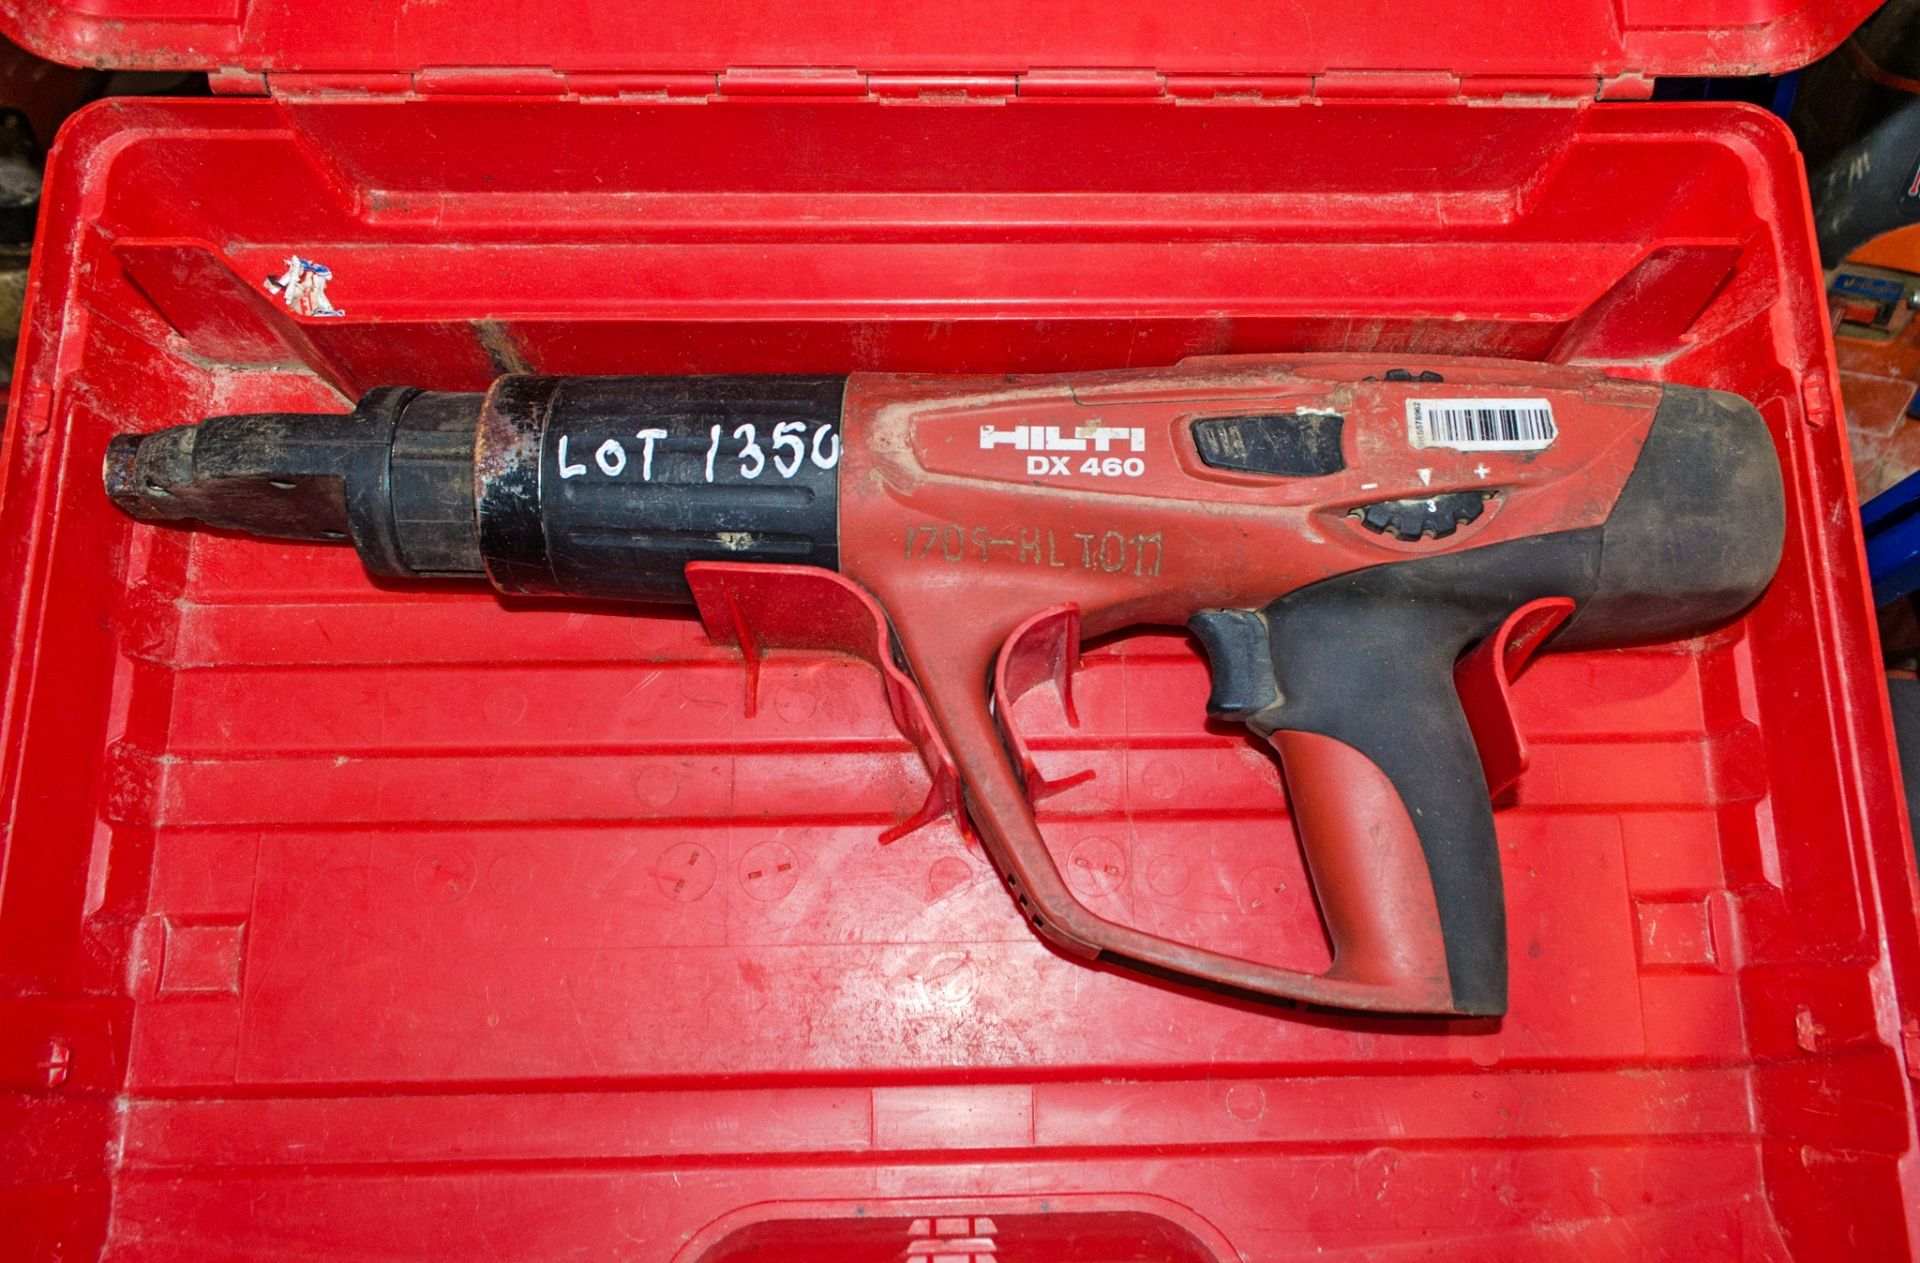 Hilti DX460 nail gun c/w carry case 1709-HLT011